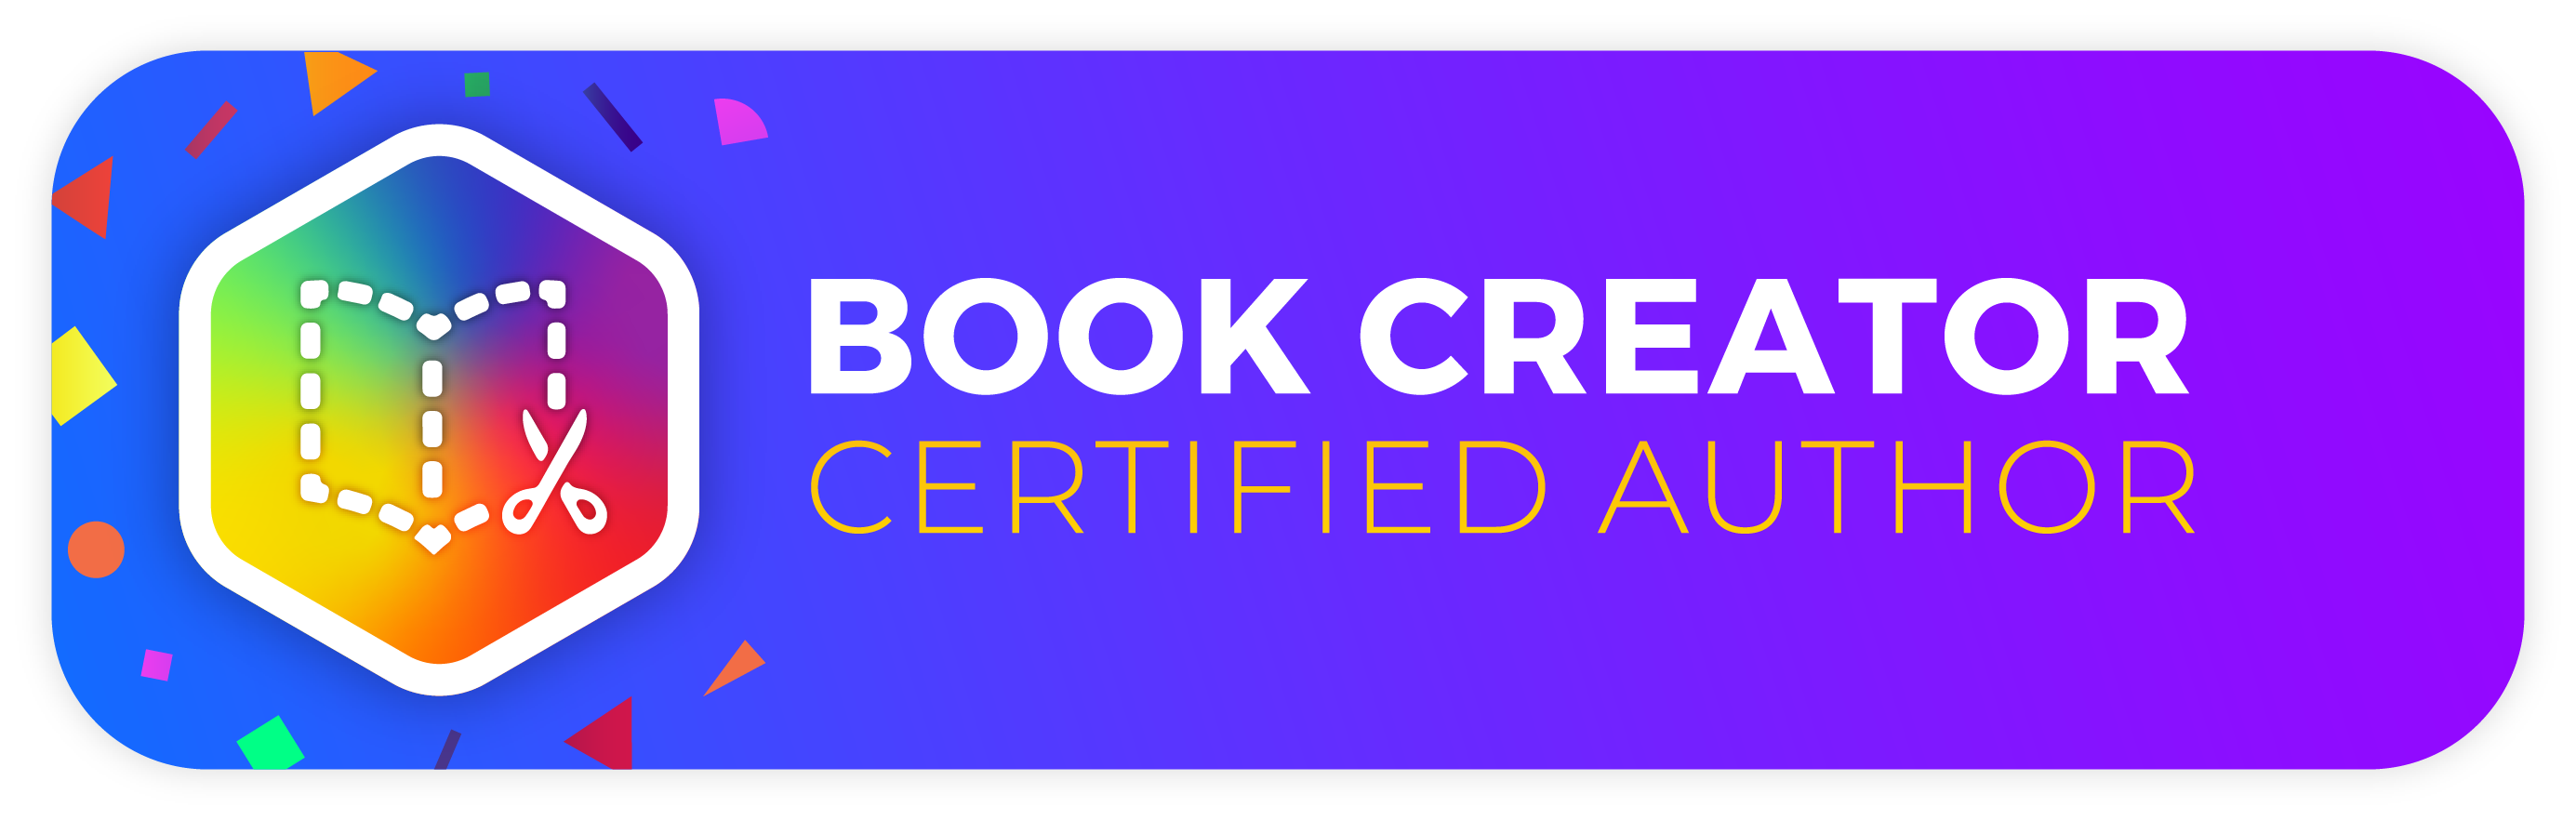 Book Creator Certified Author